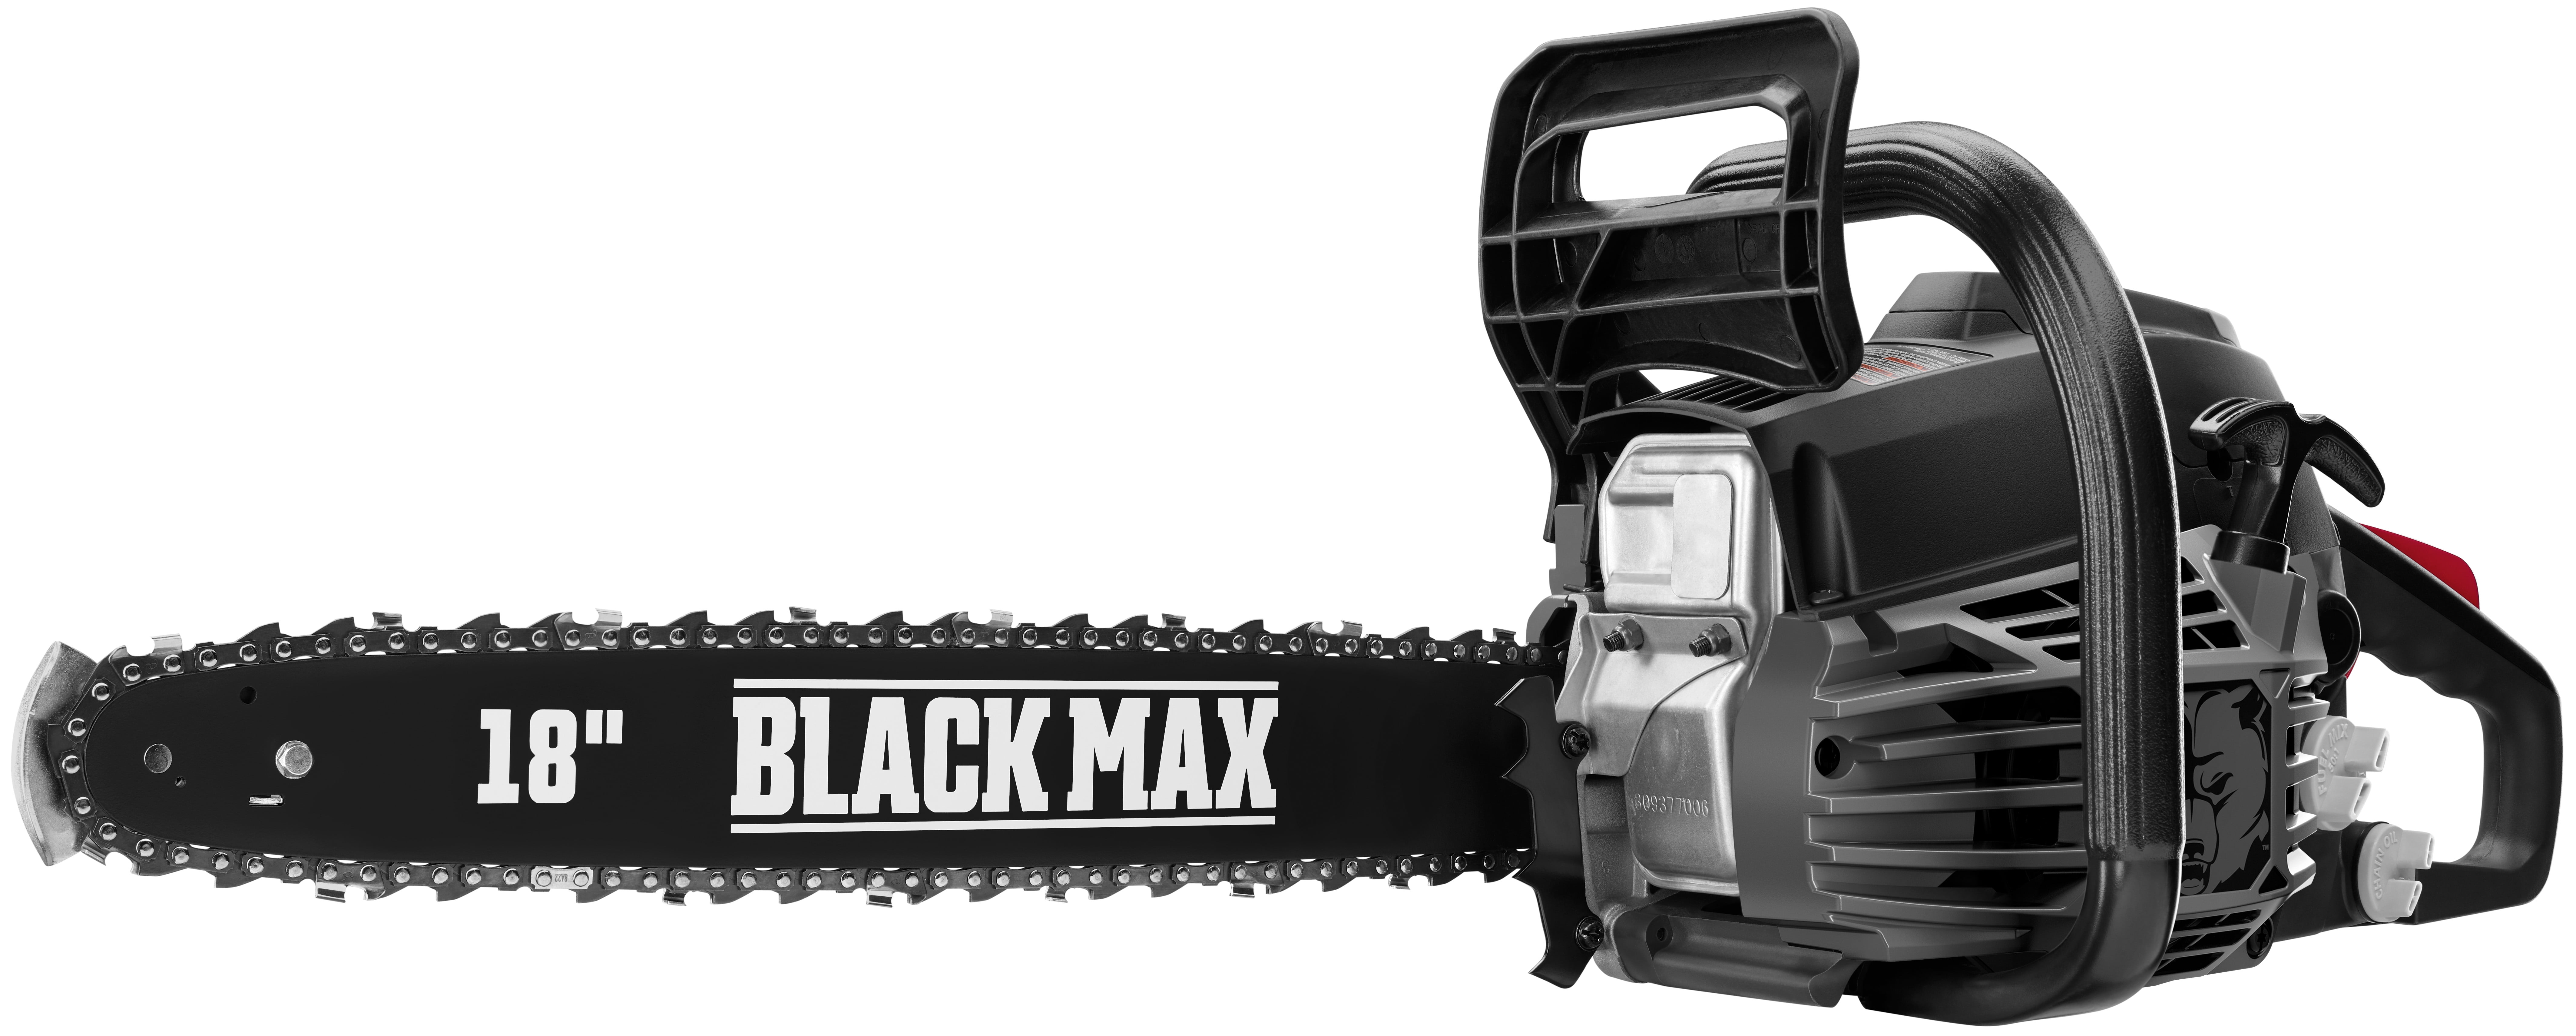 Black Max 18-inch Gas Chainsaw 38cc 2-Cycle Engine - 1